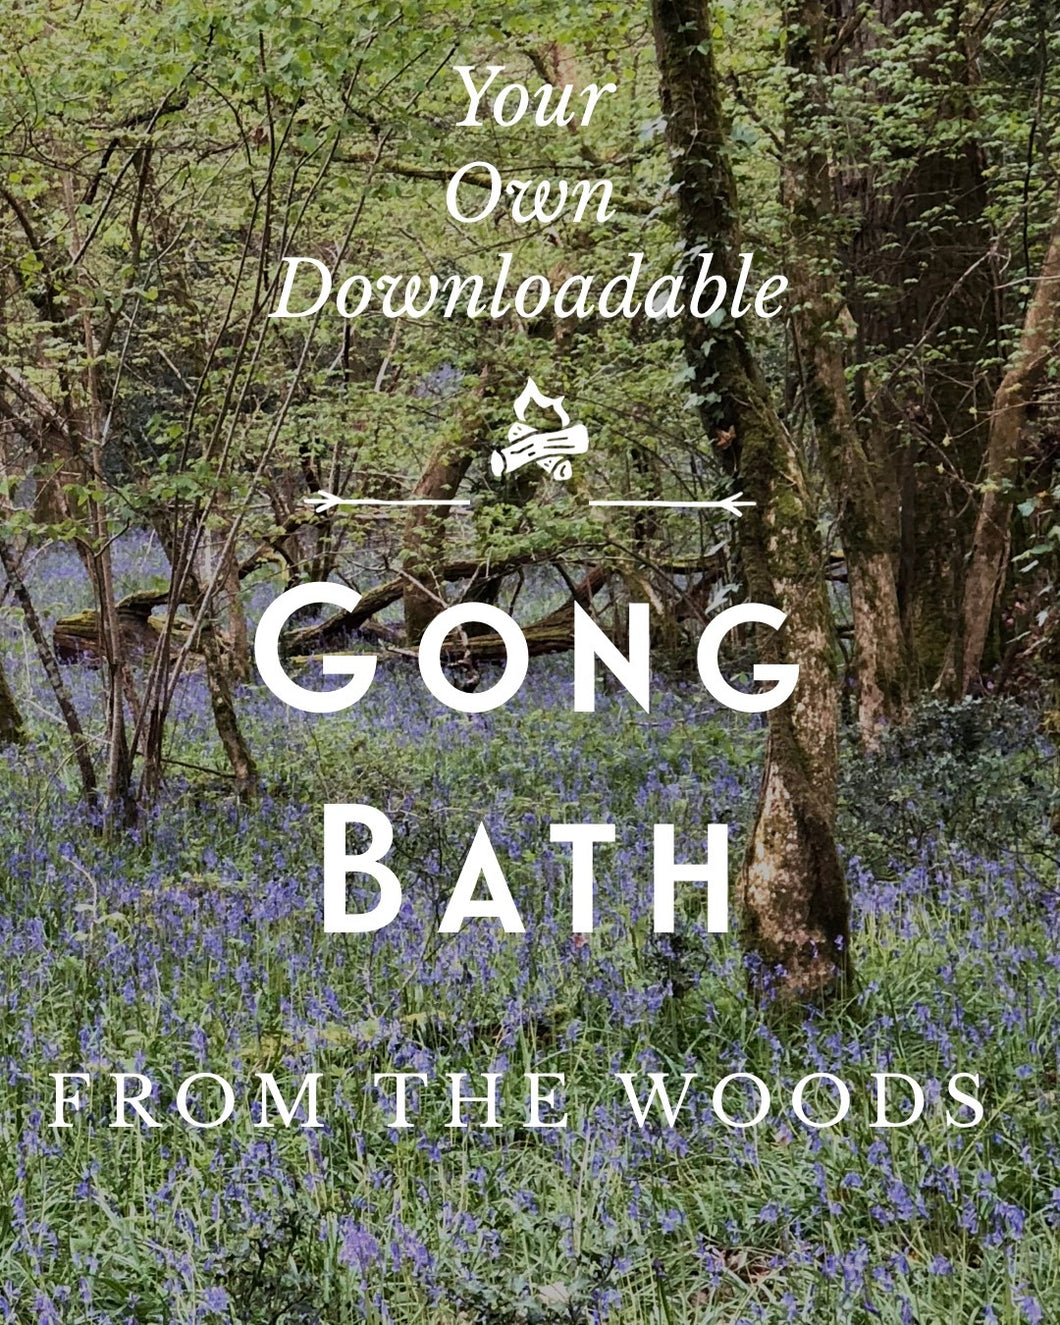 Gong Bath, download, sound bath, relaxing, virtual, mental health, wellness, calming, relaxation, meditation, help